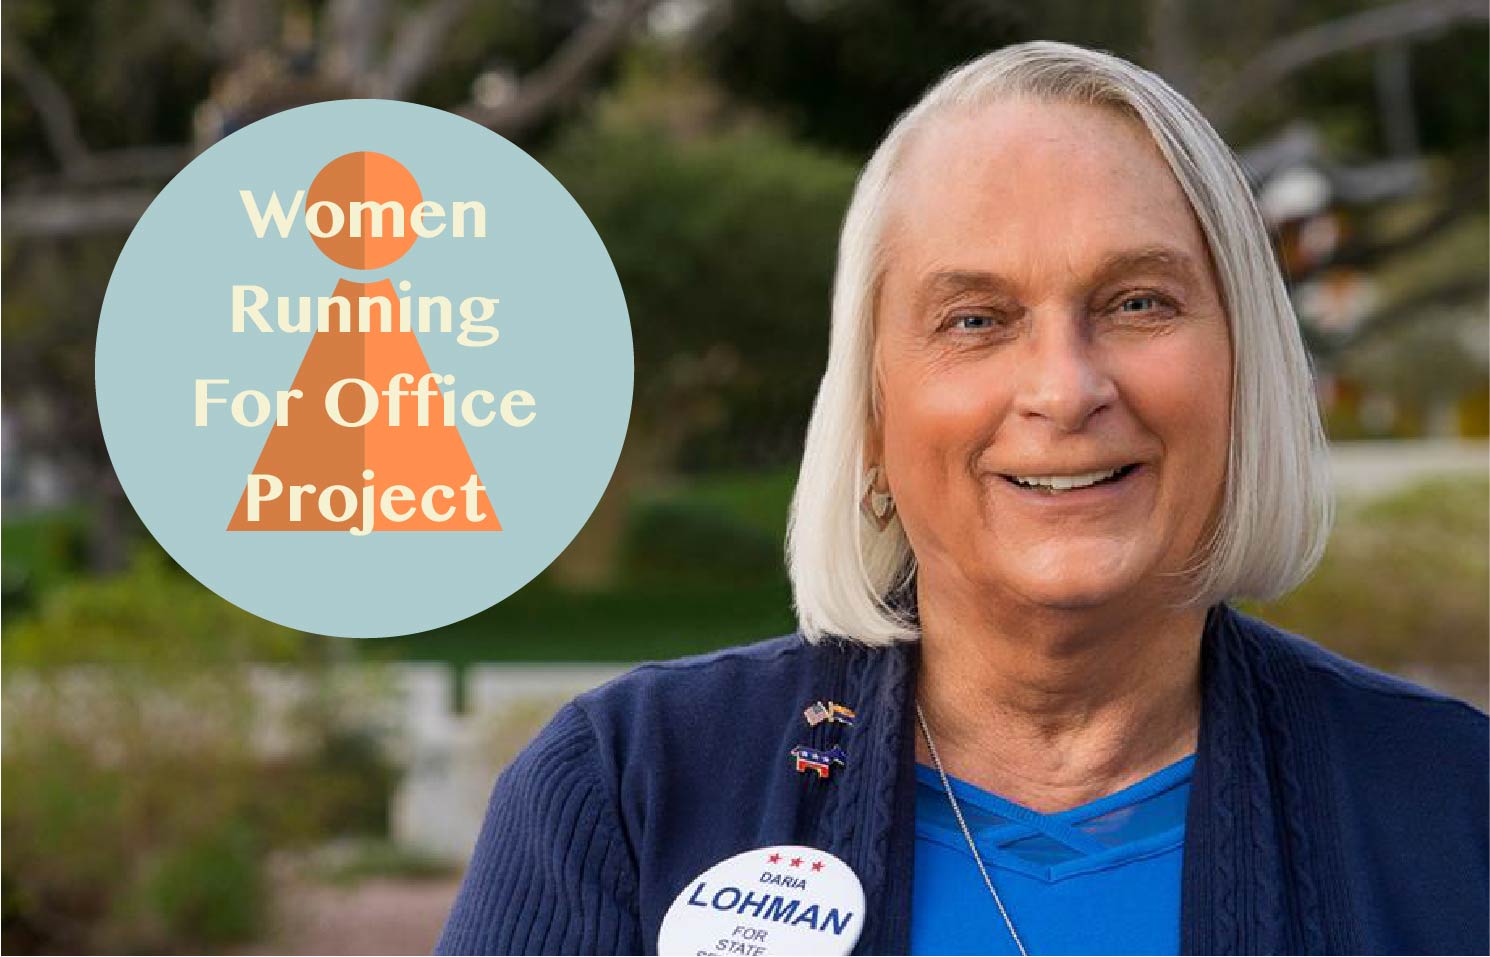 Daria Lohman is running for Arizona Senate District 23